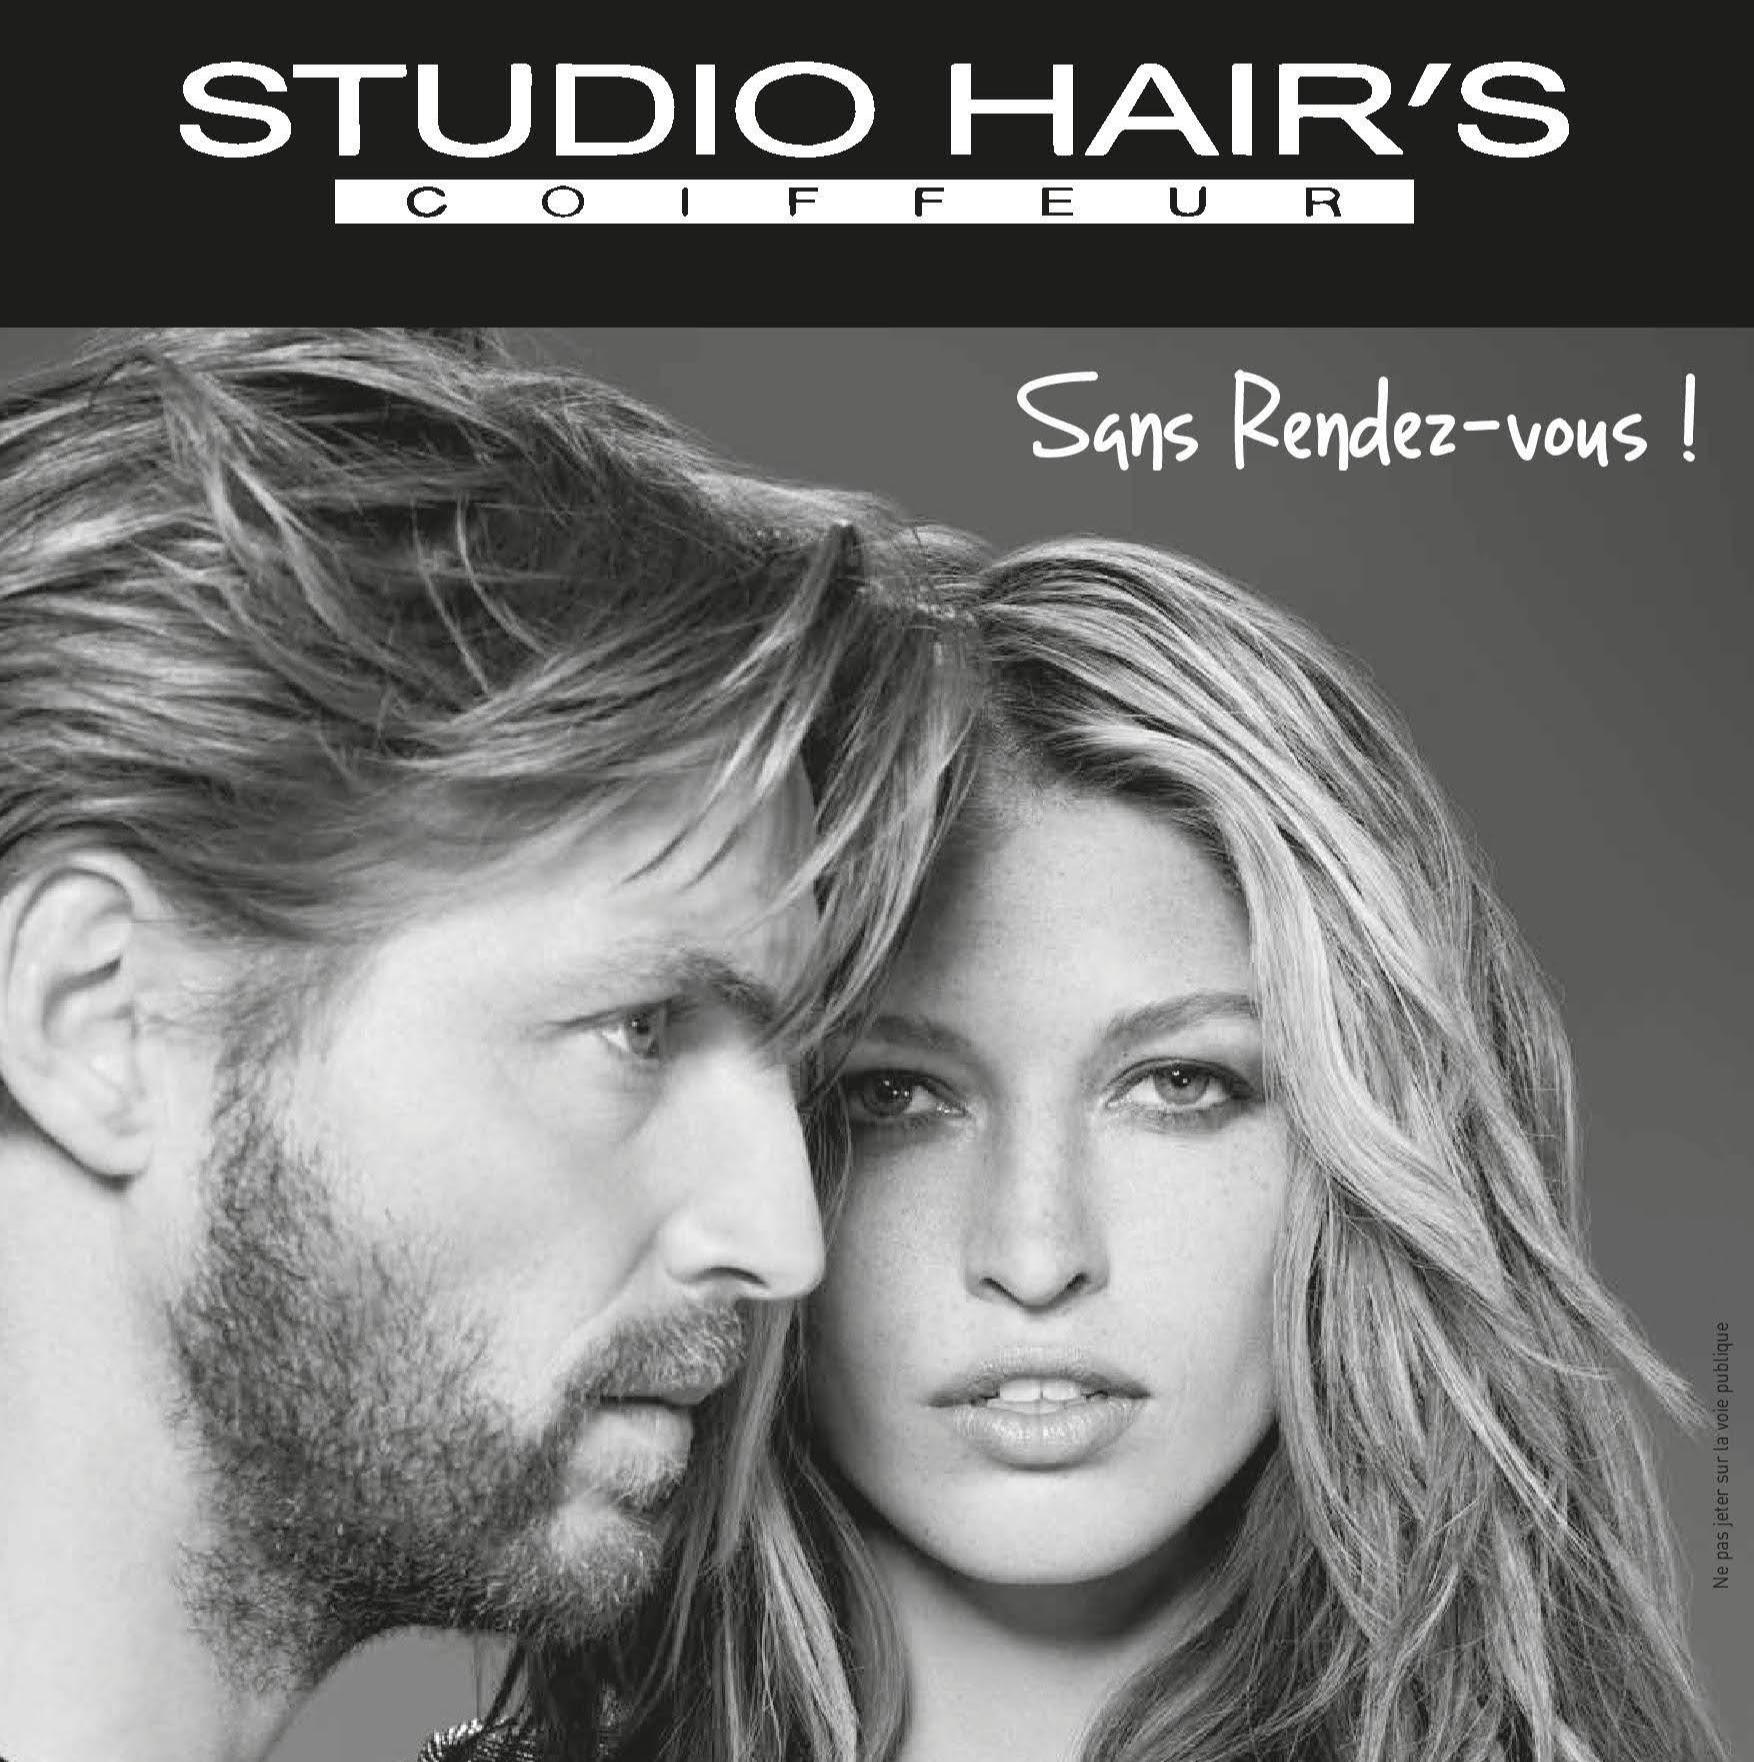 Studio Hair's Ormesson Sur Marne